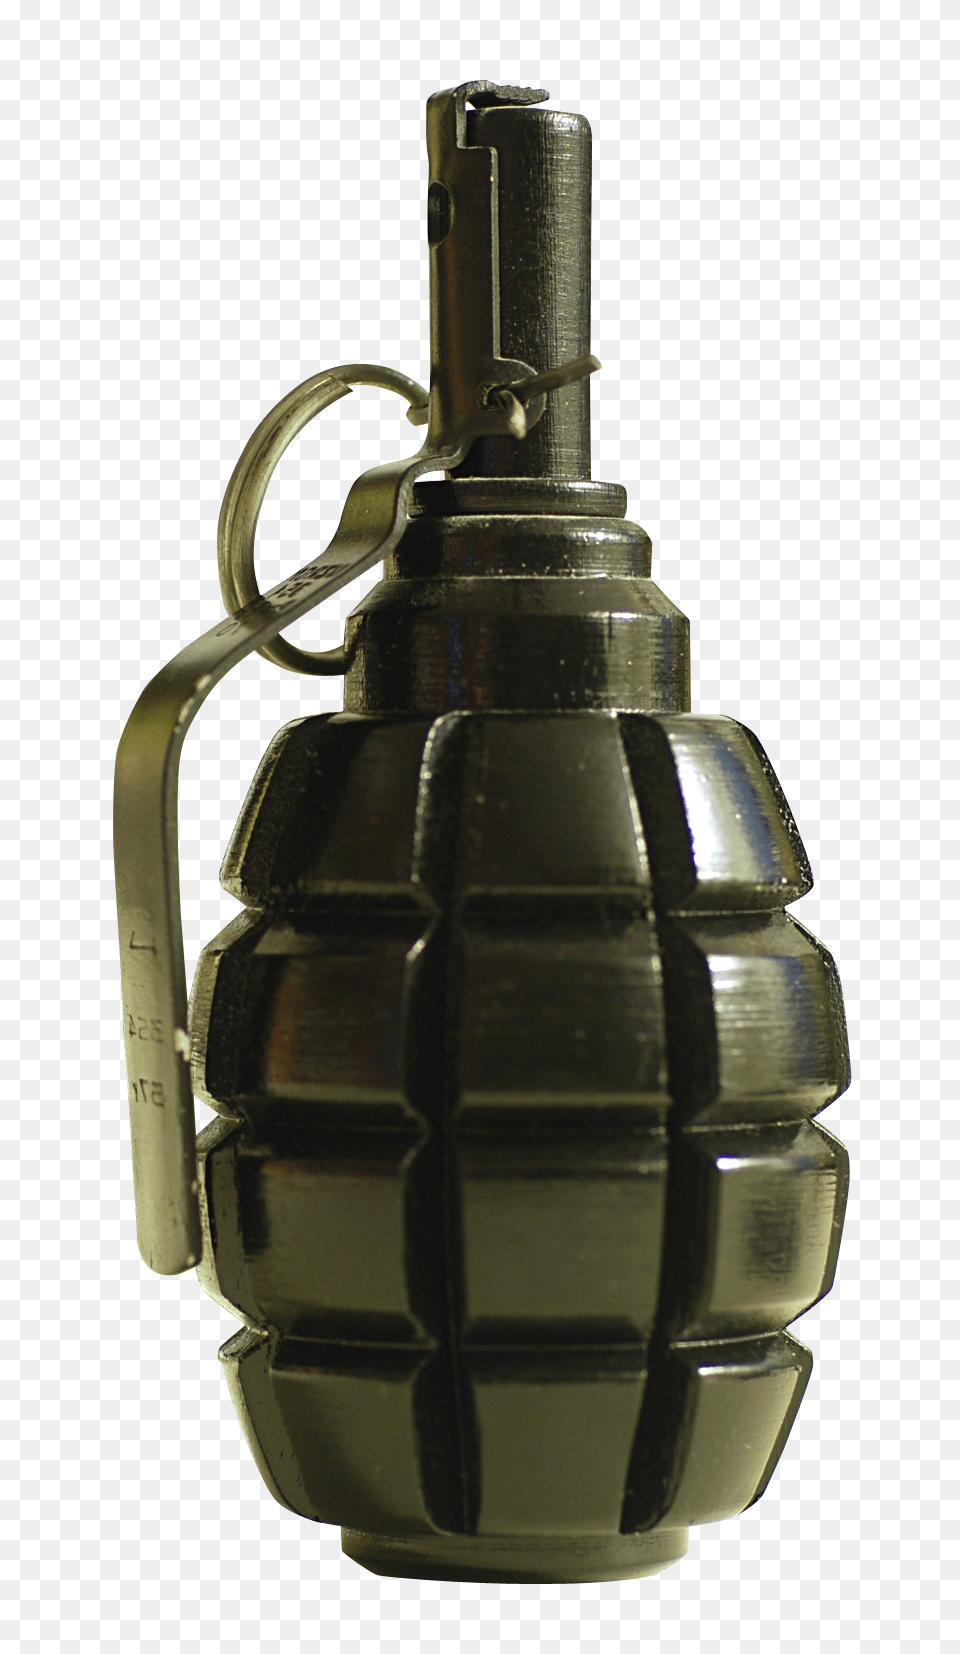 Pngpix Com Hand Grenade Image, Ammunition, Weapon, Bomb Free Transparent Png